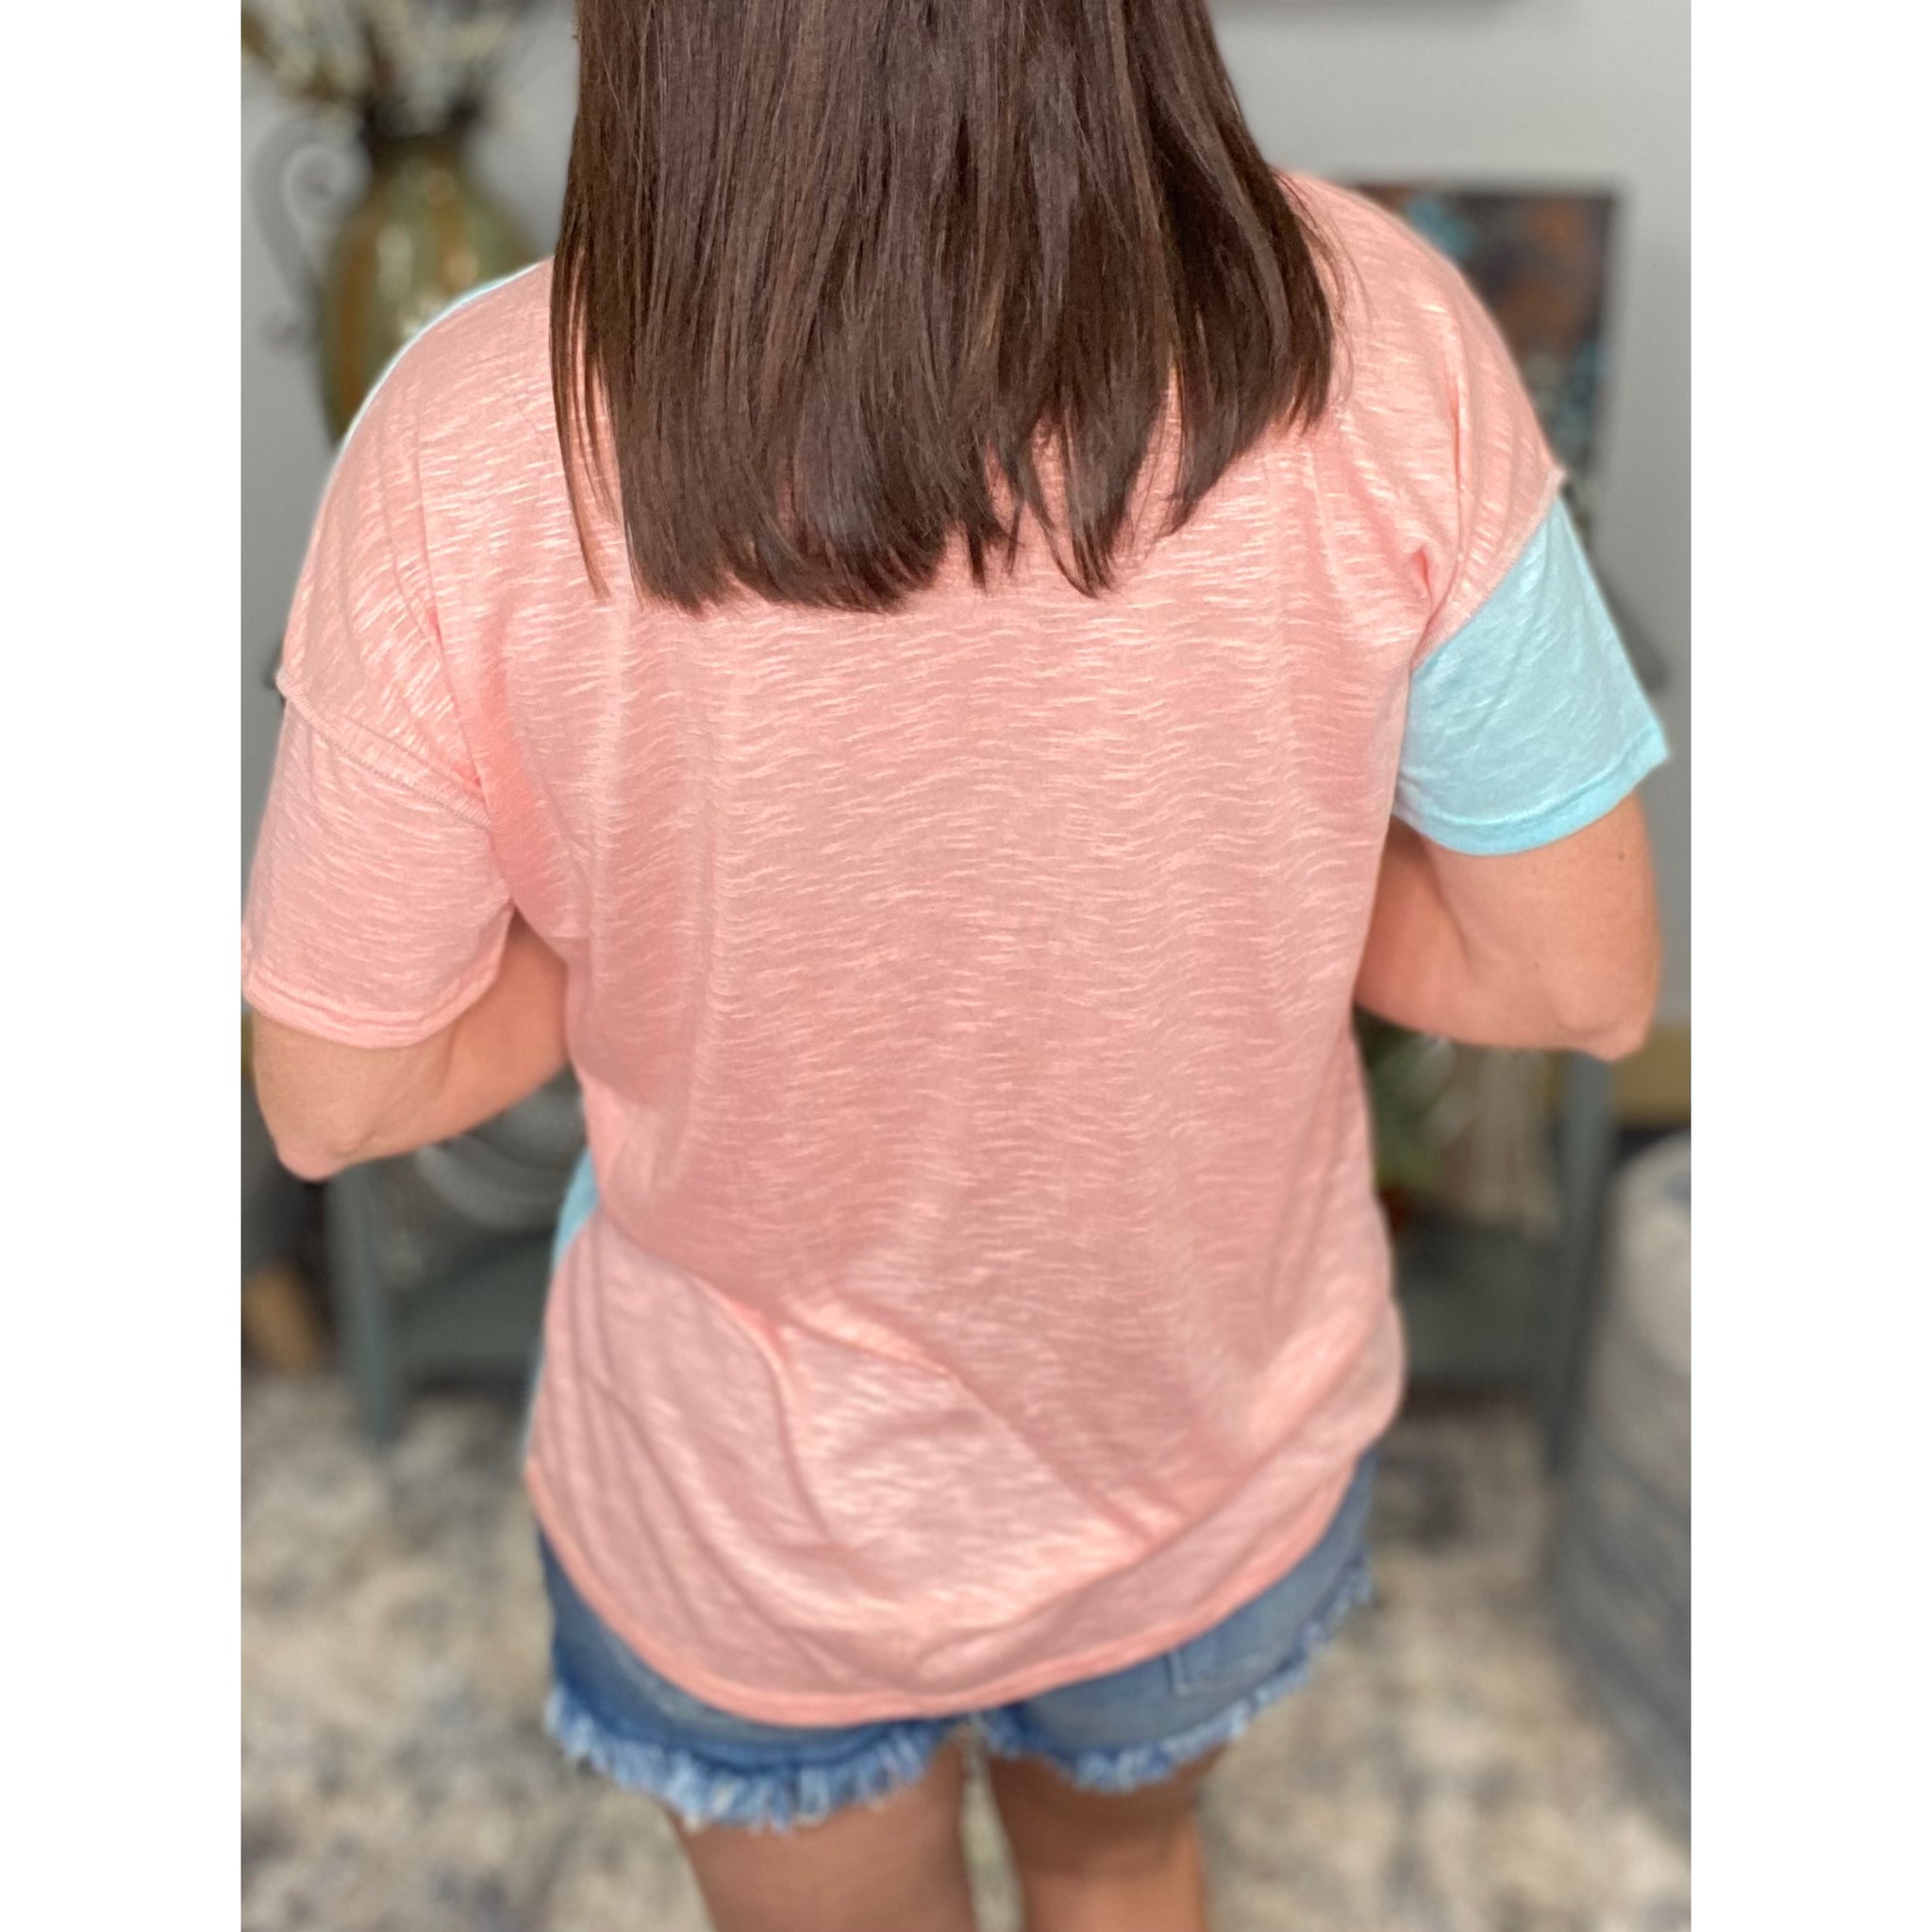 “Give It Up” Color Block Contrast Melange Round Neck Short Sleeve Lightweight Shirt Pink Mint